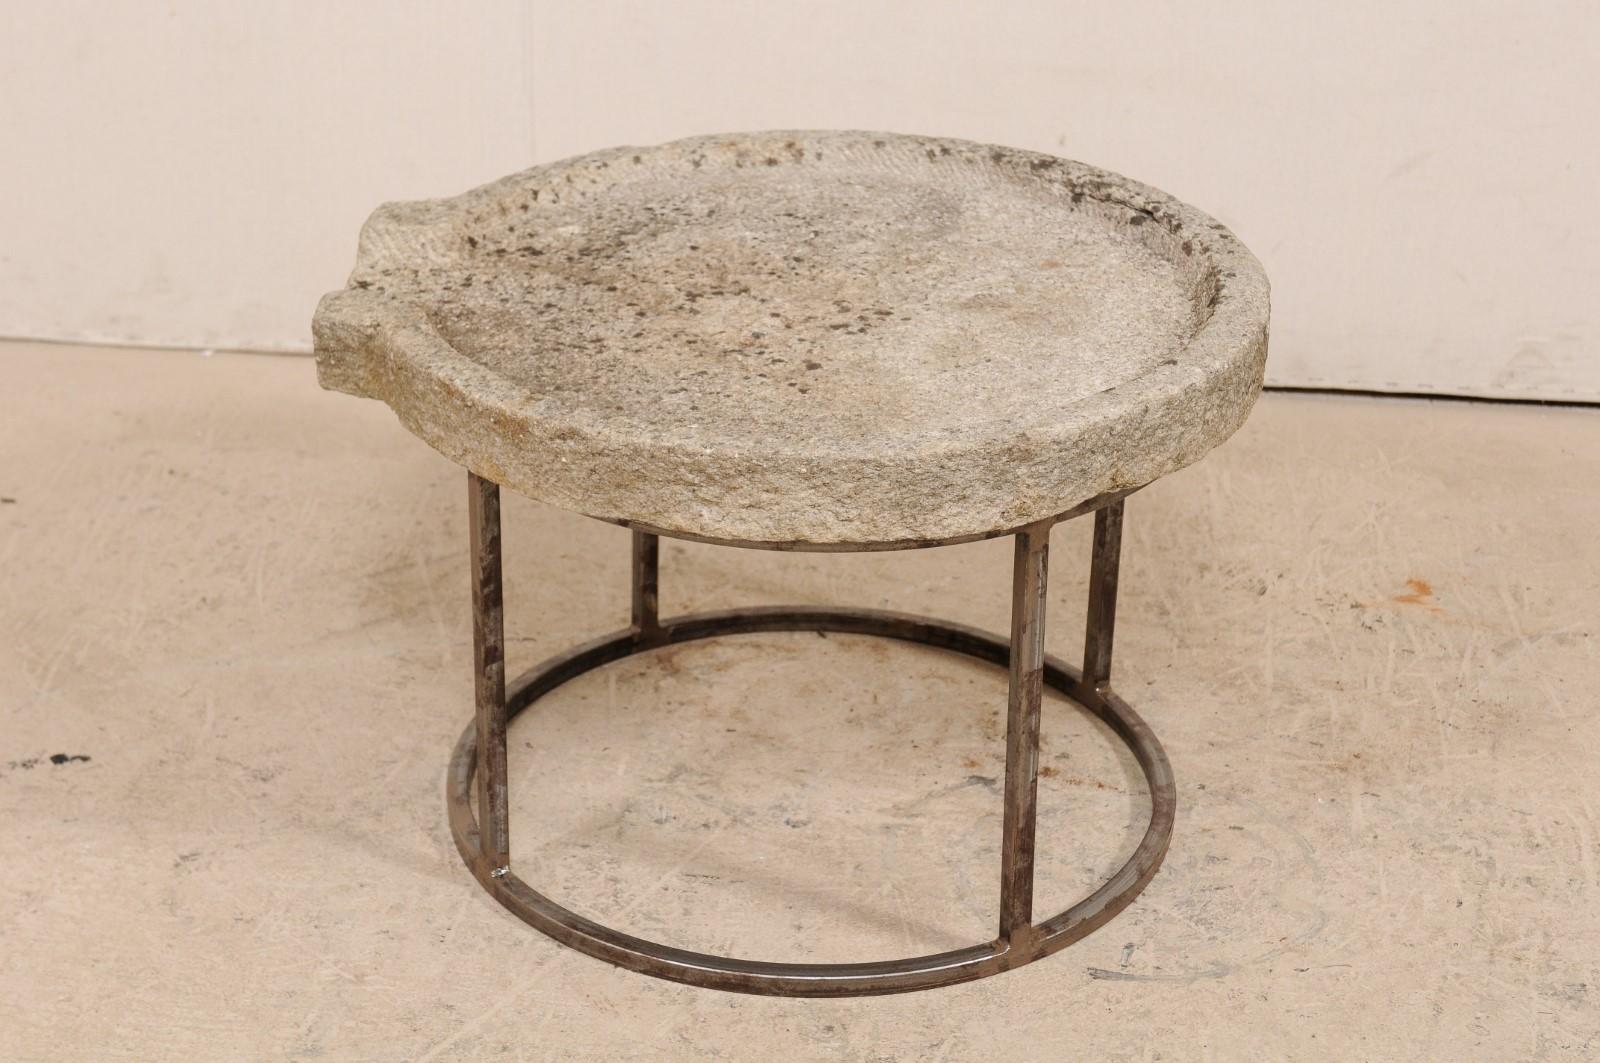 European 19th Century Mediterranean Stone Trough Coffee Table on Custom Base